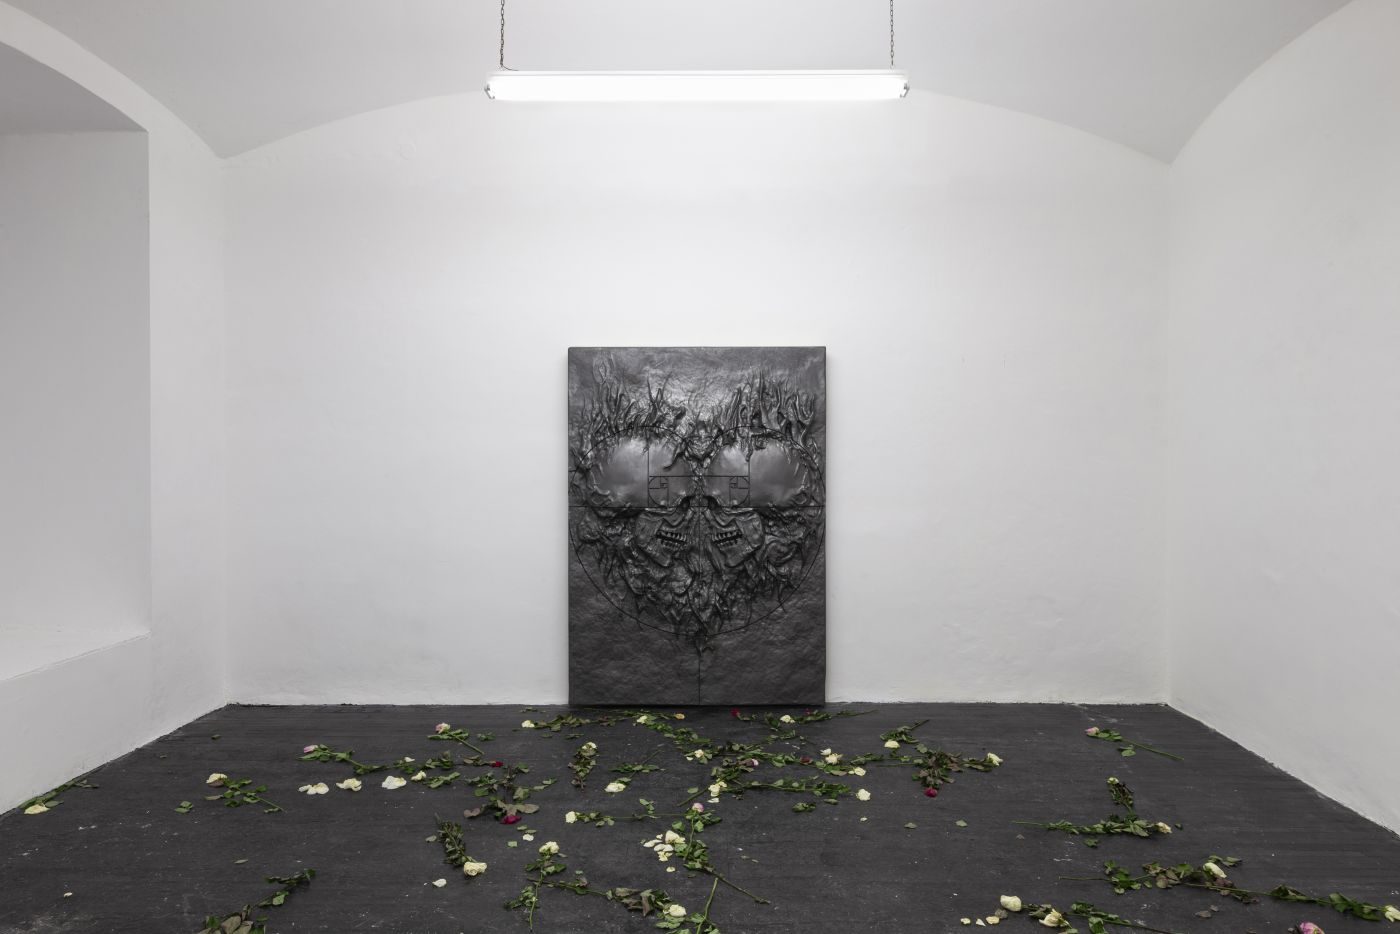 Julian-Jakob Kneer, MARTYR (feast upon me / Alle Uhren bleiben stehen), 2019, varnish on polyurethane foam, 185 x 133 x 23 cm